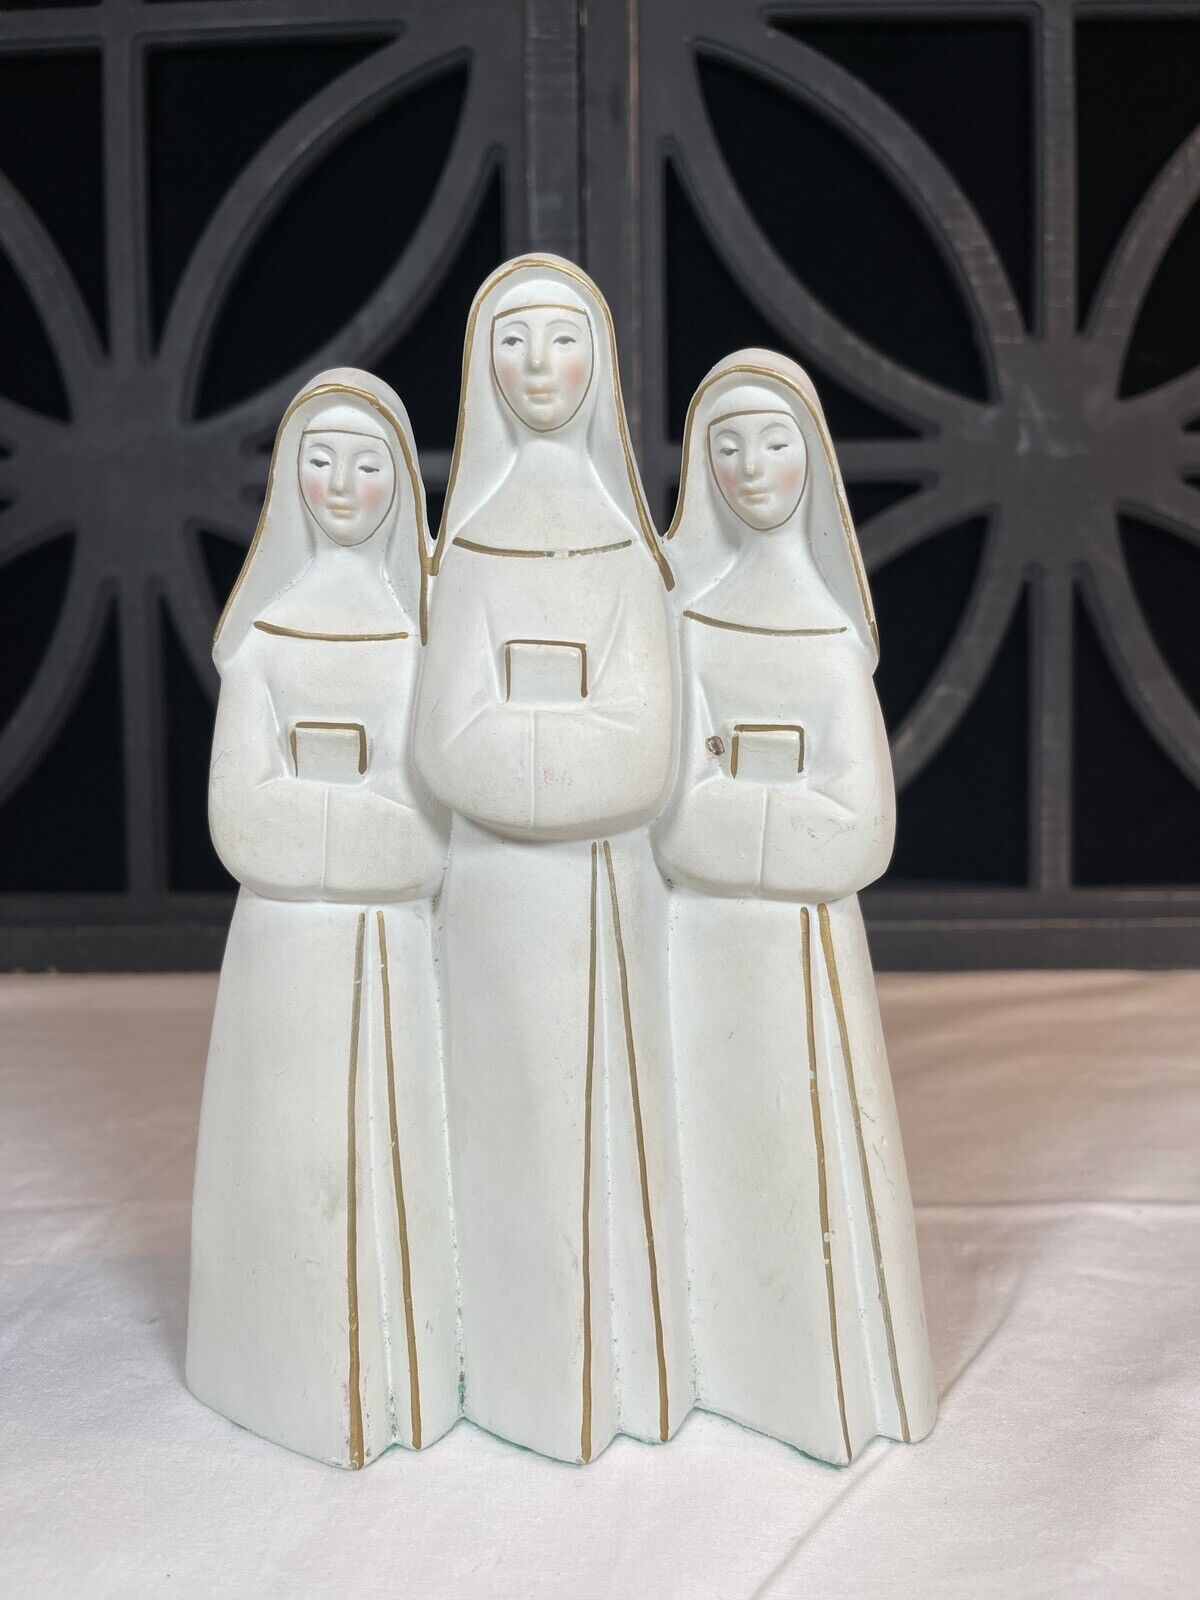 VTG Trio of Nuns Figurine Music Box White Habits Gold Tone Trim with Choir Books